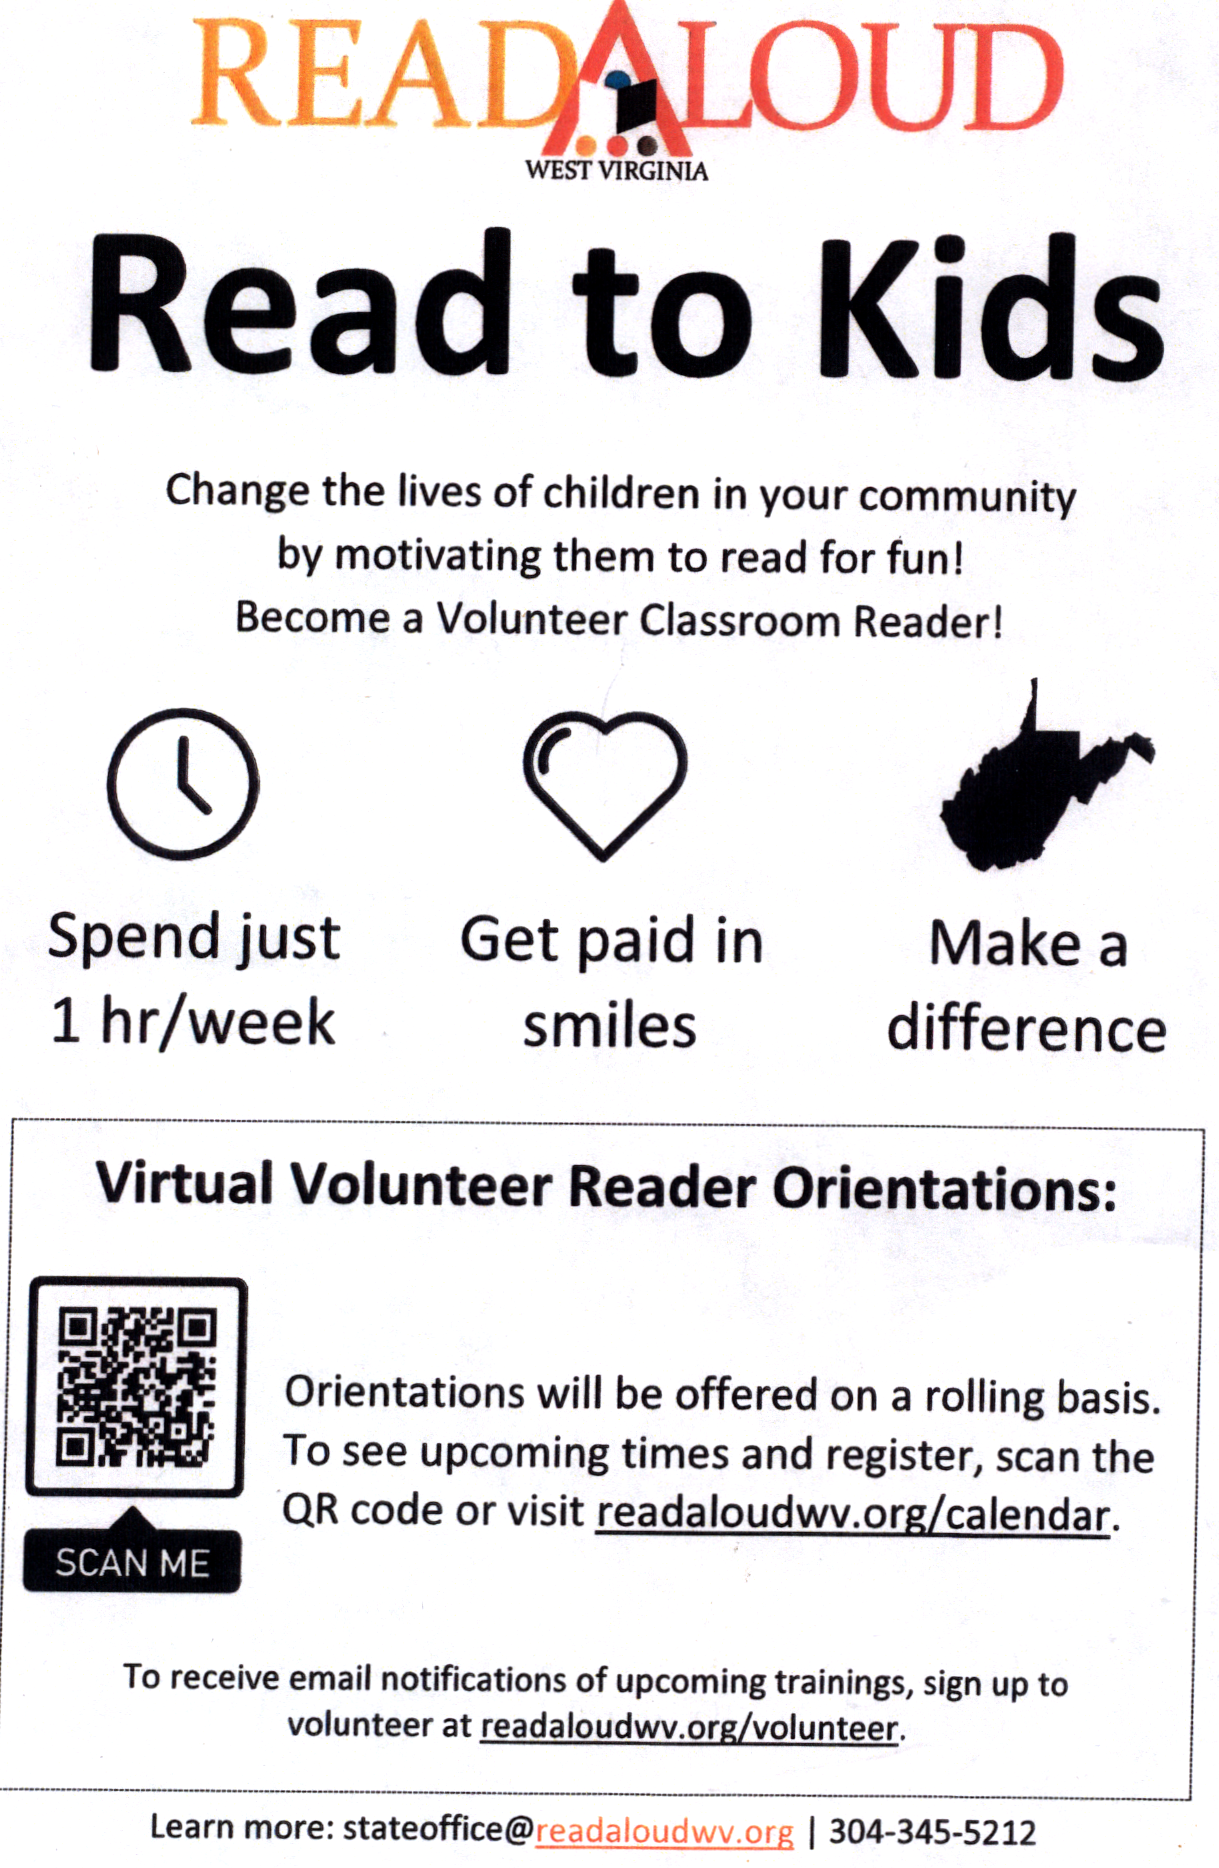 Become a Volunteer Classroom Reader